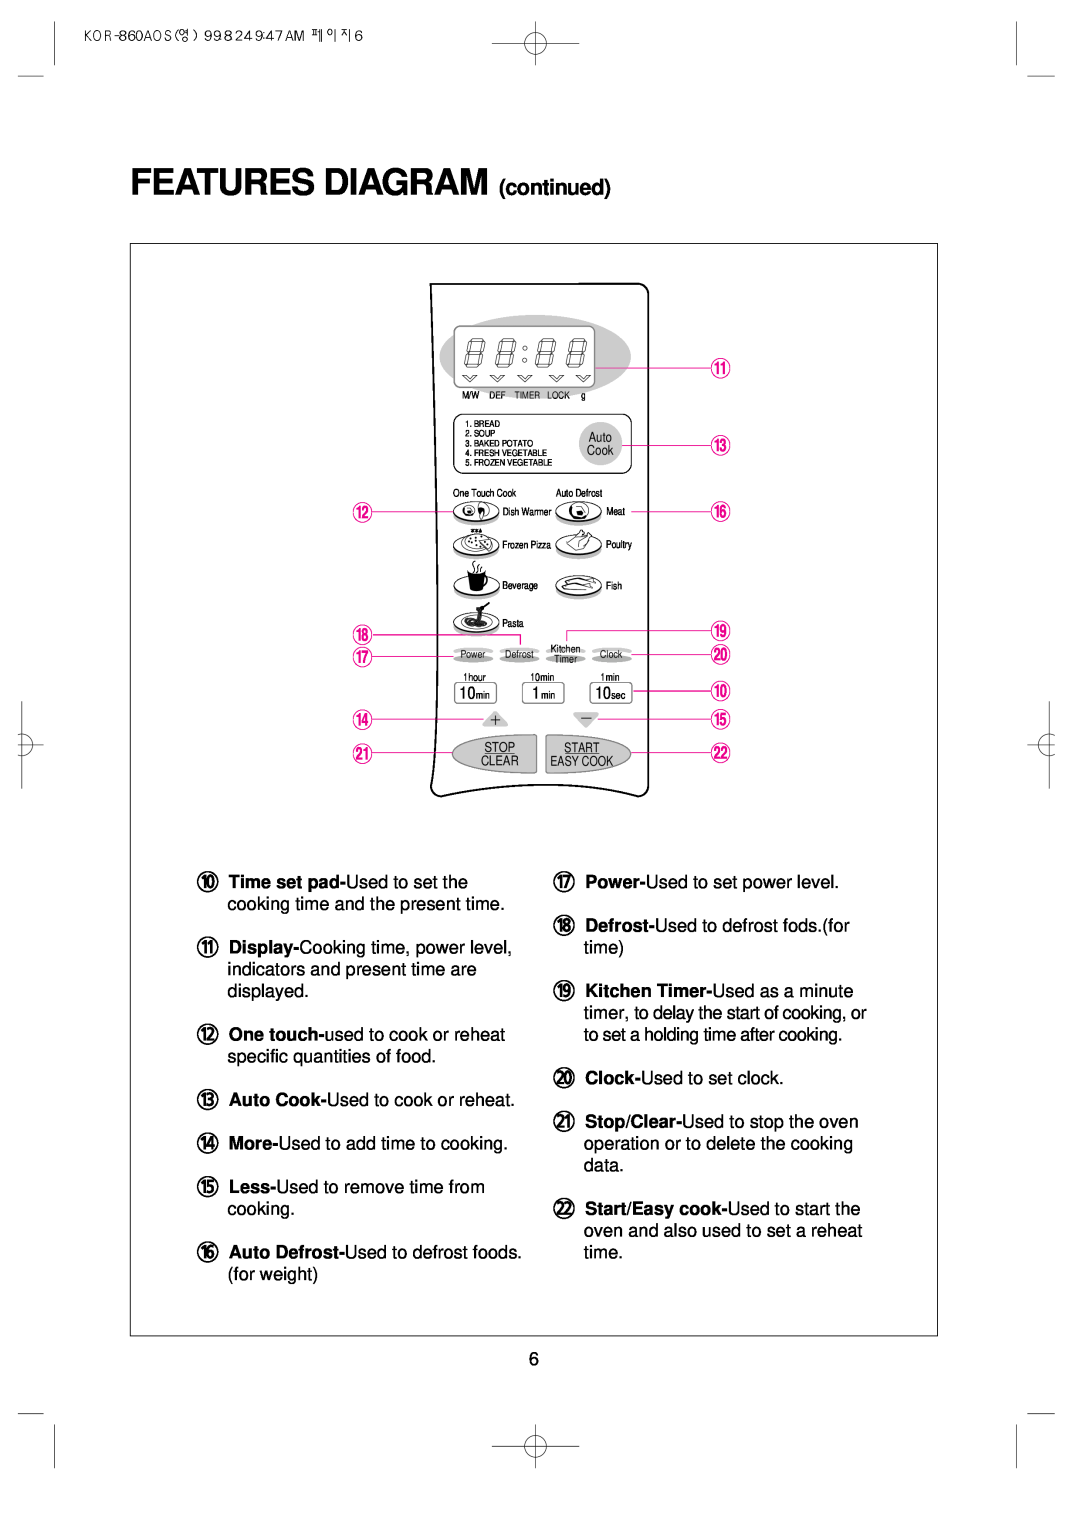 Daewoo KOR-860A manual FEATURES DIAGRAM continued 